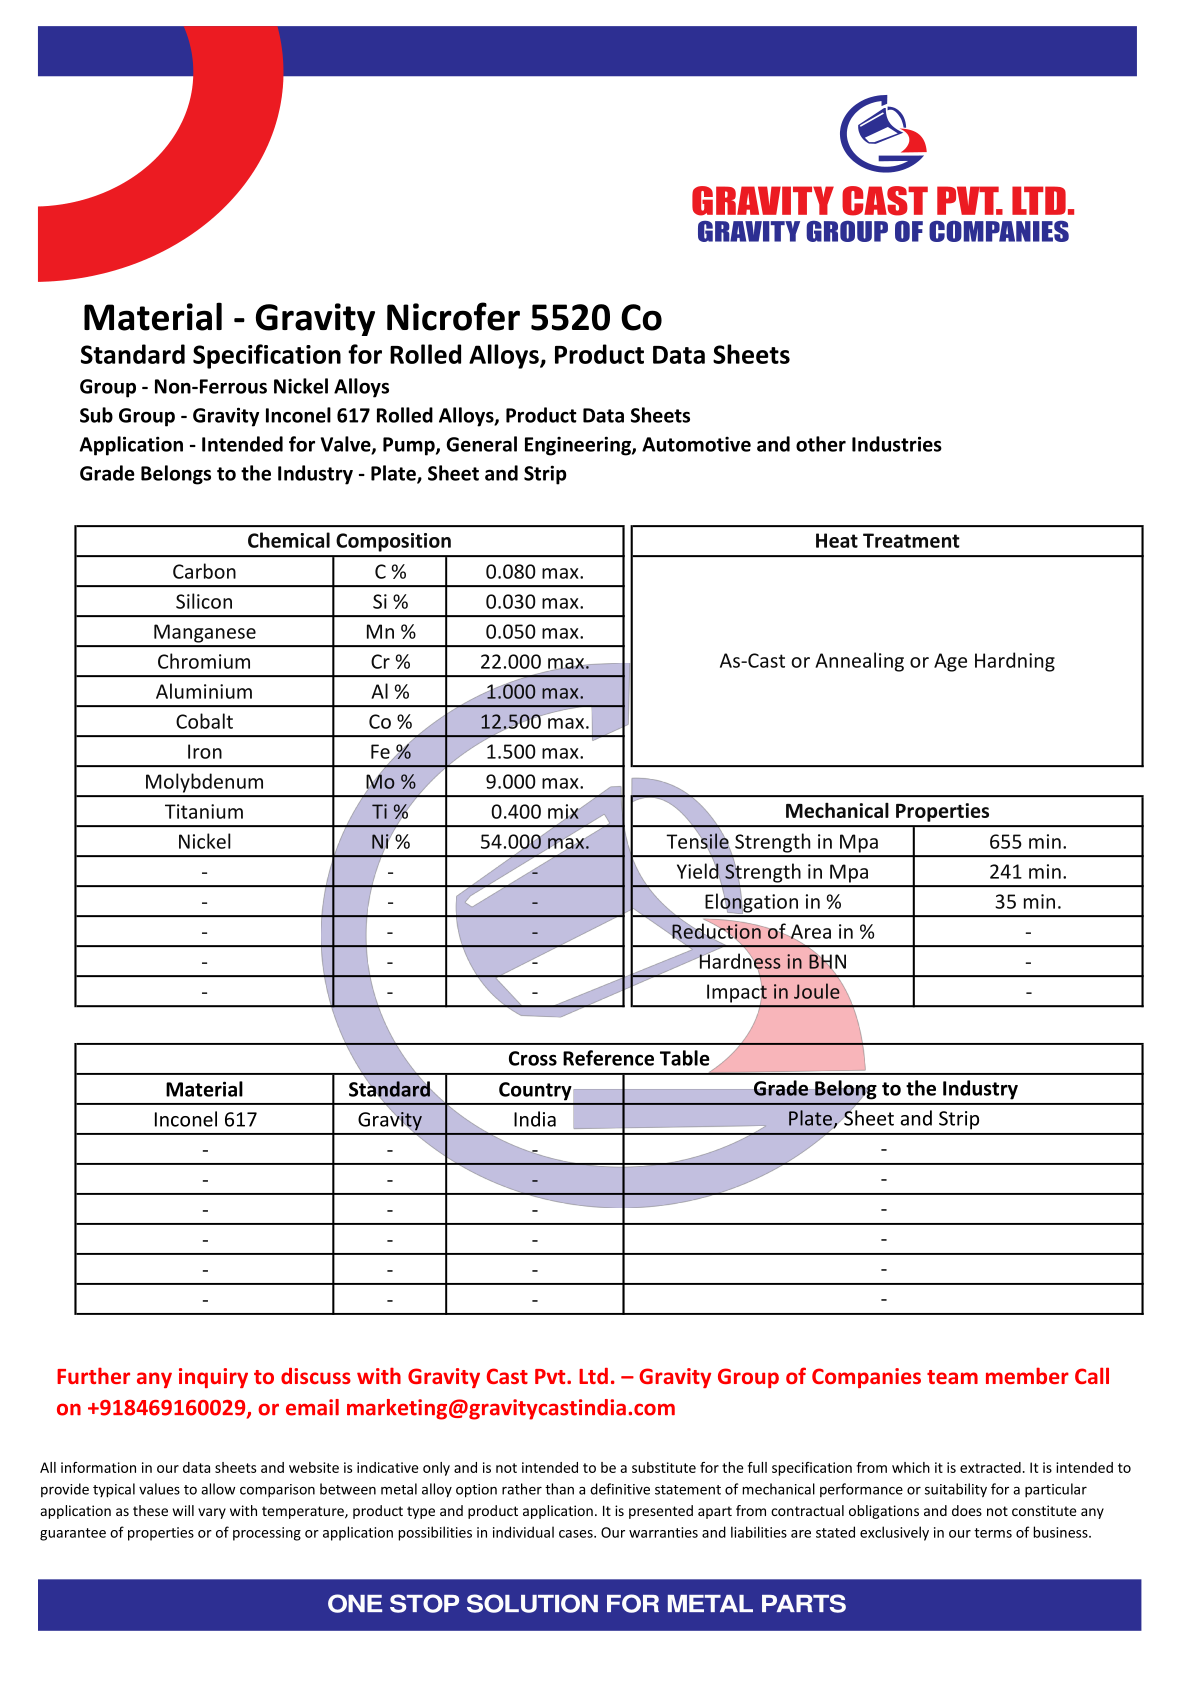 Gravity Nicrofer 5520 Co.pdf